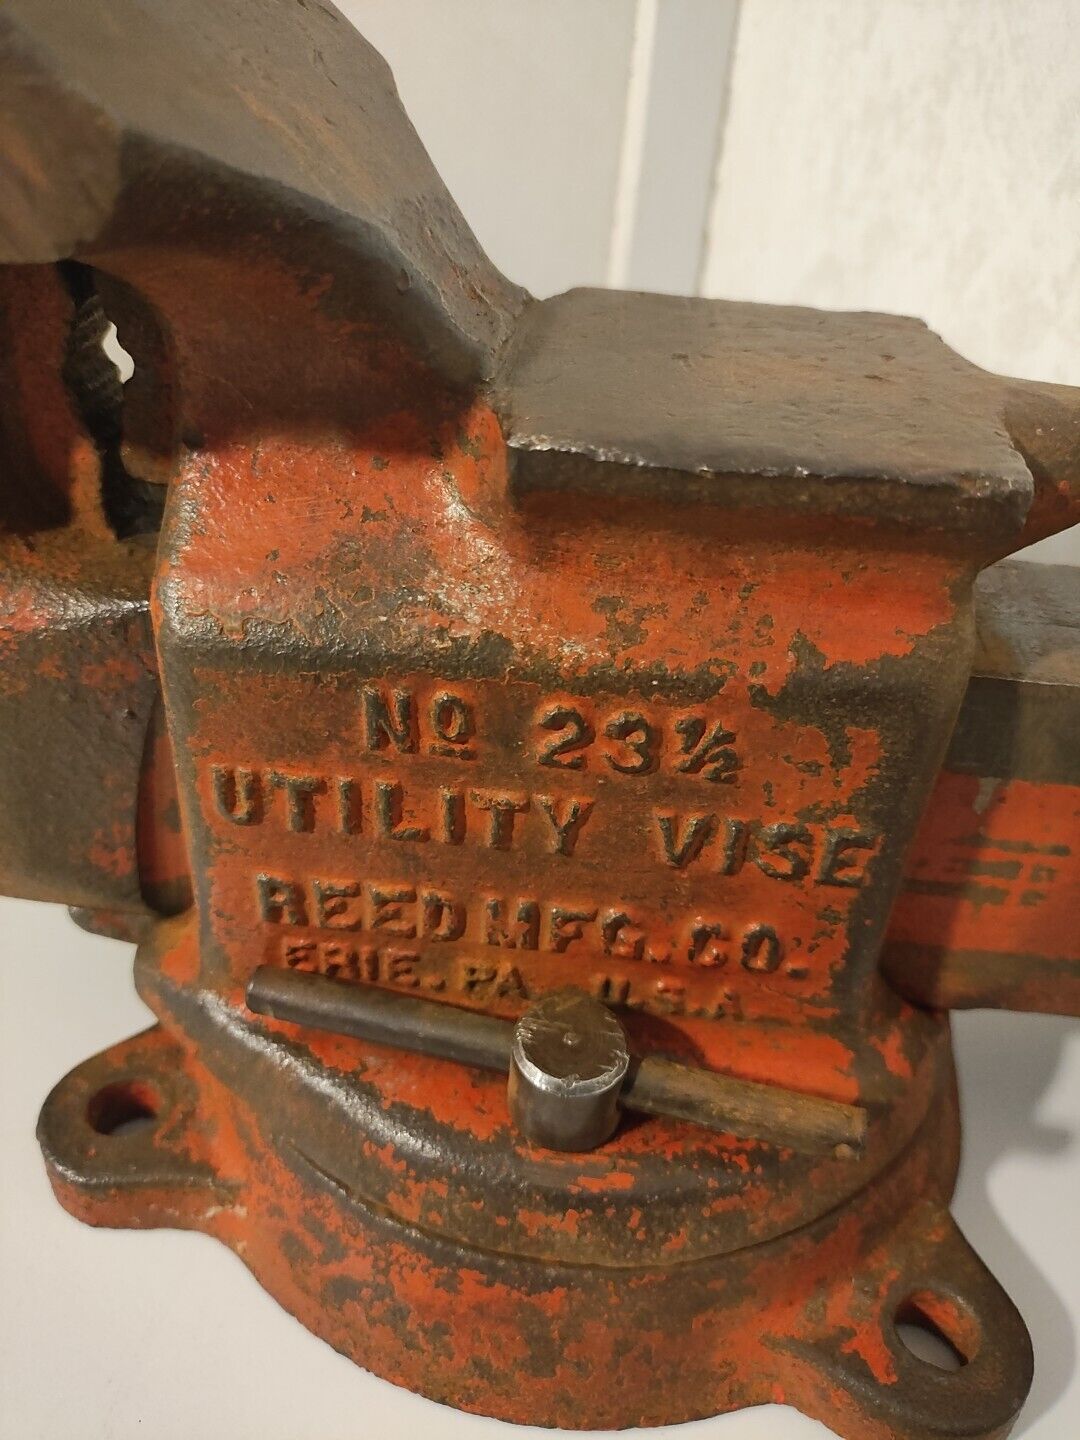 Vintage Reed Utility Vise No. 23-1/2 Erie PA USA